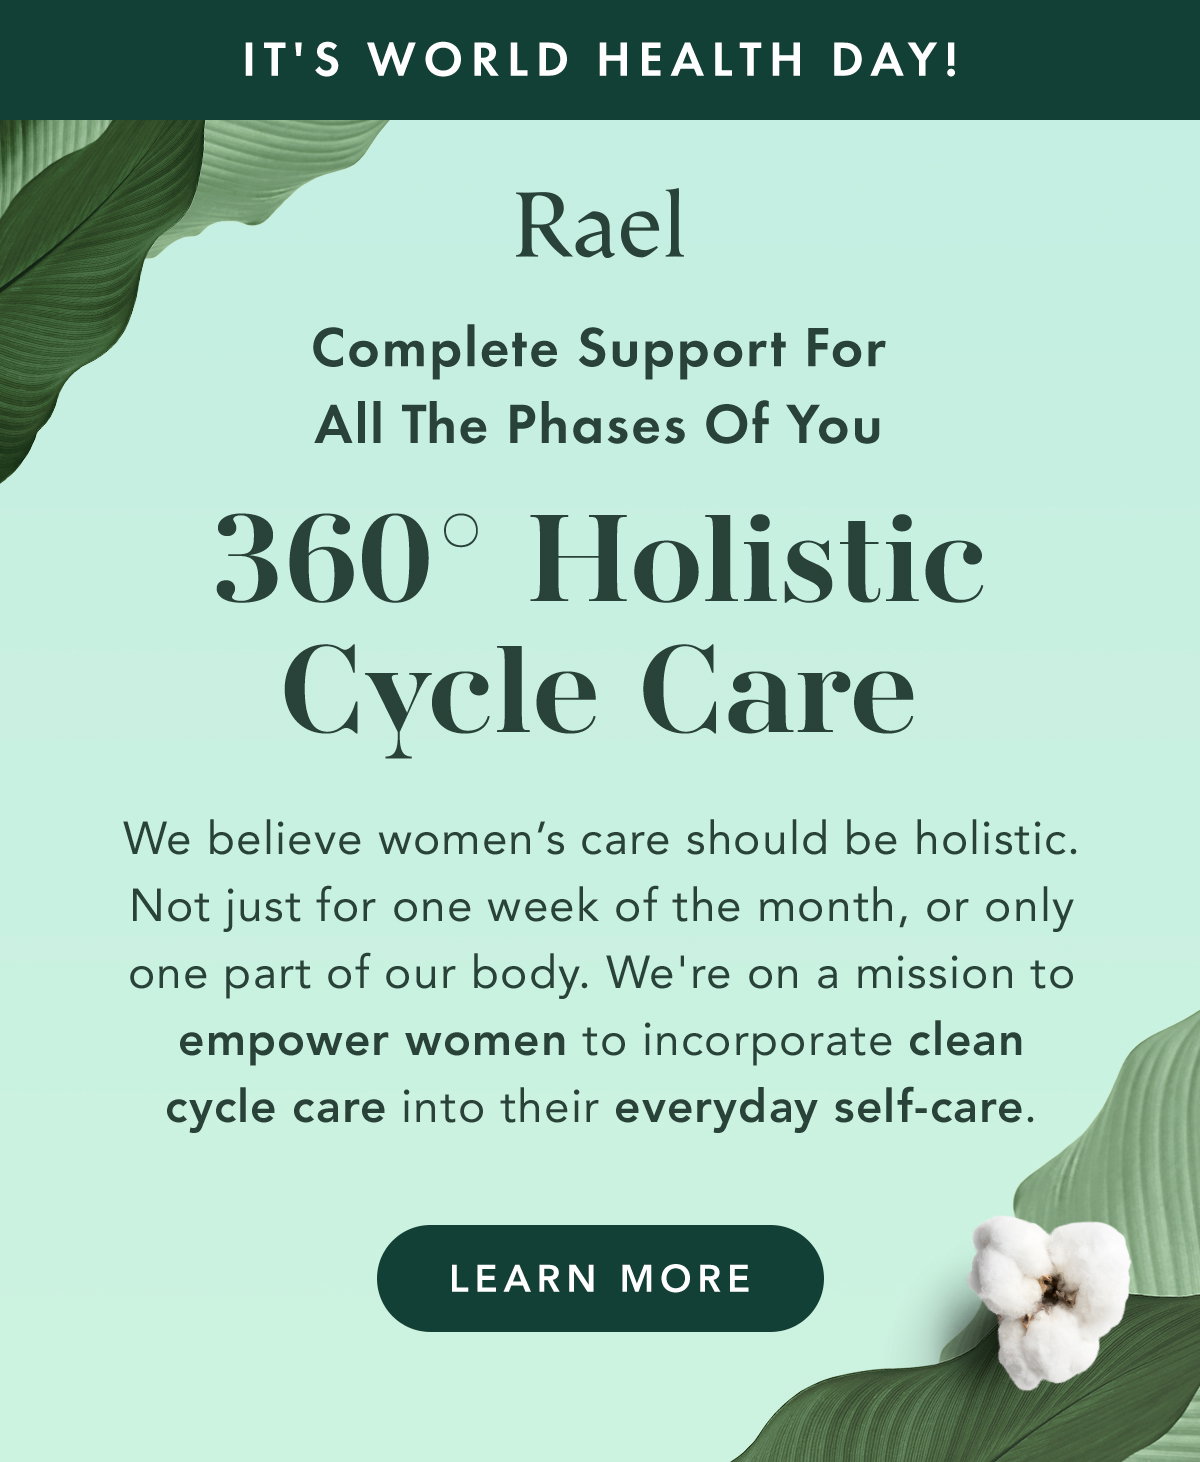 Reusable Period Care 50% OFF?! 🩸 - Rael